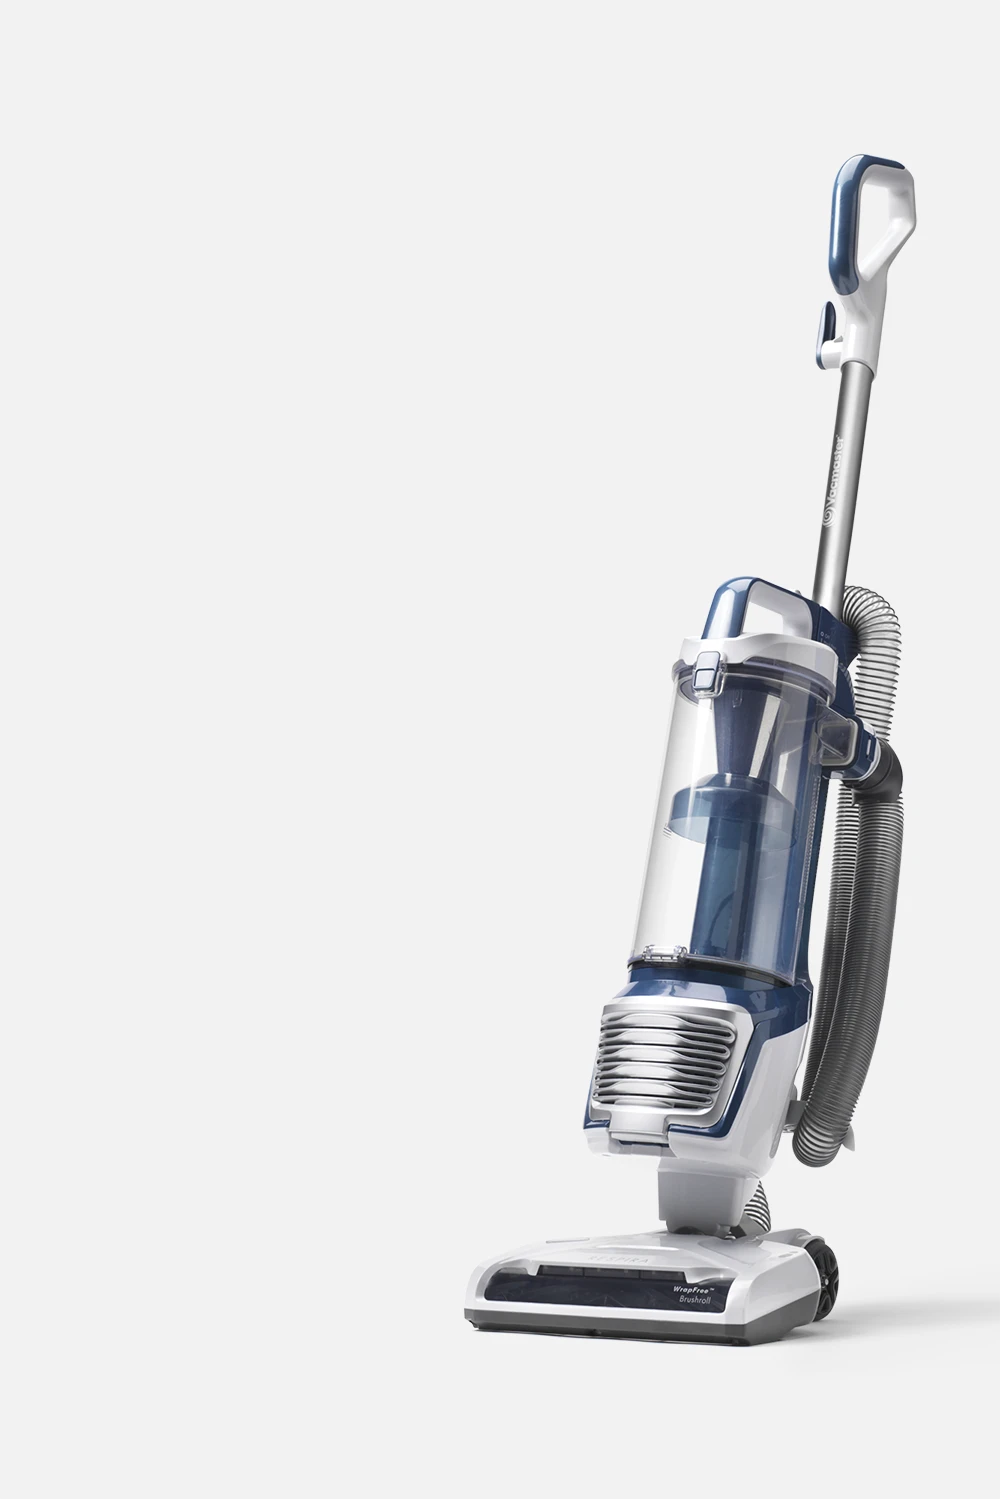 Vacmaster Respira upright vacuum cleaner ad